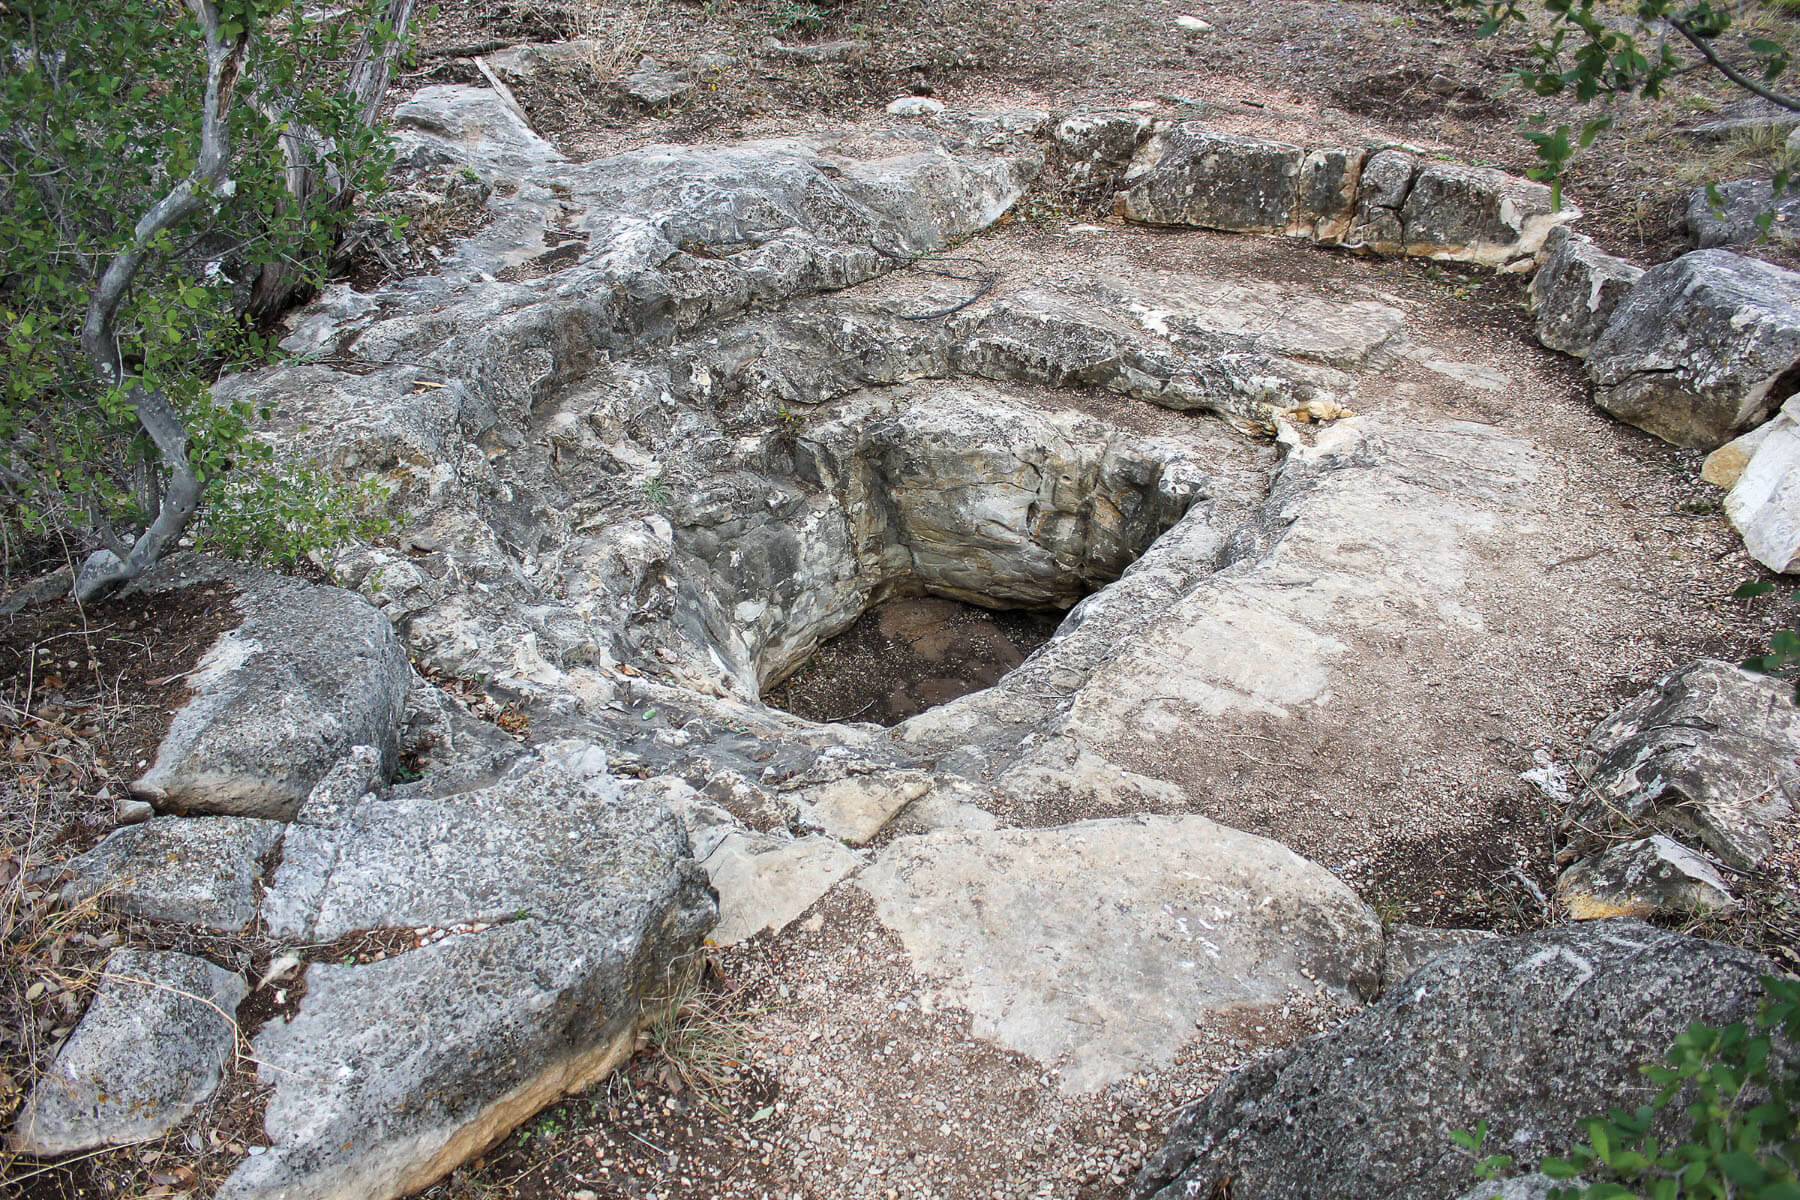 Gray rock surrounding "dead man's hole"